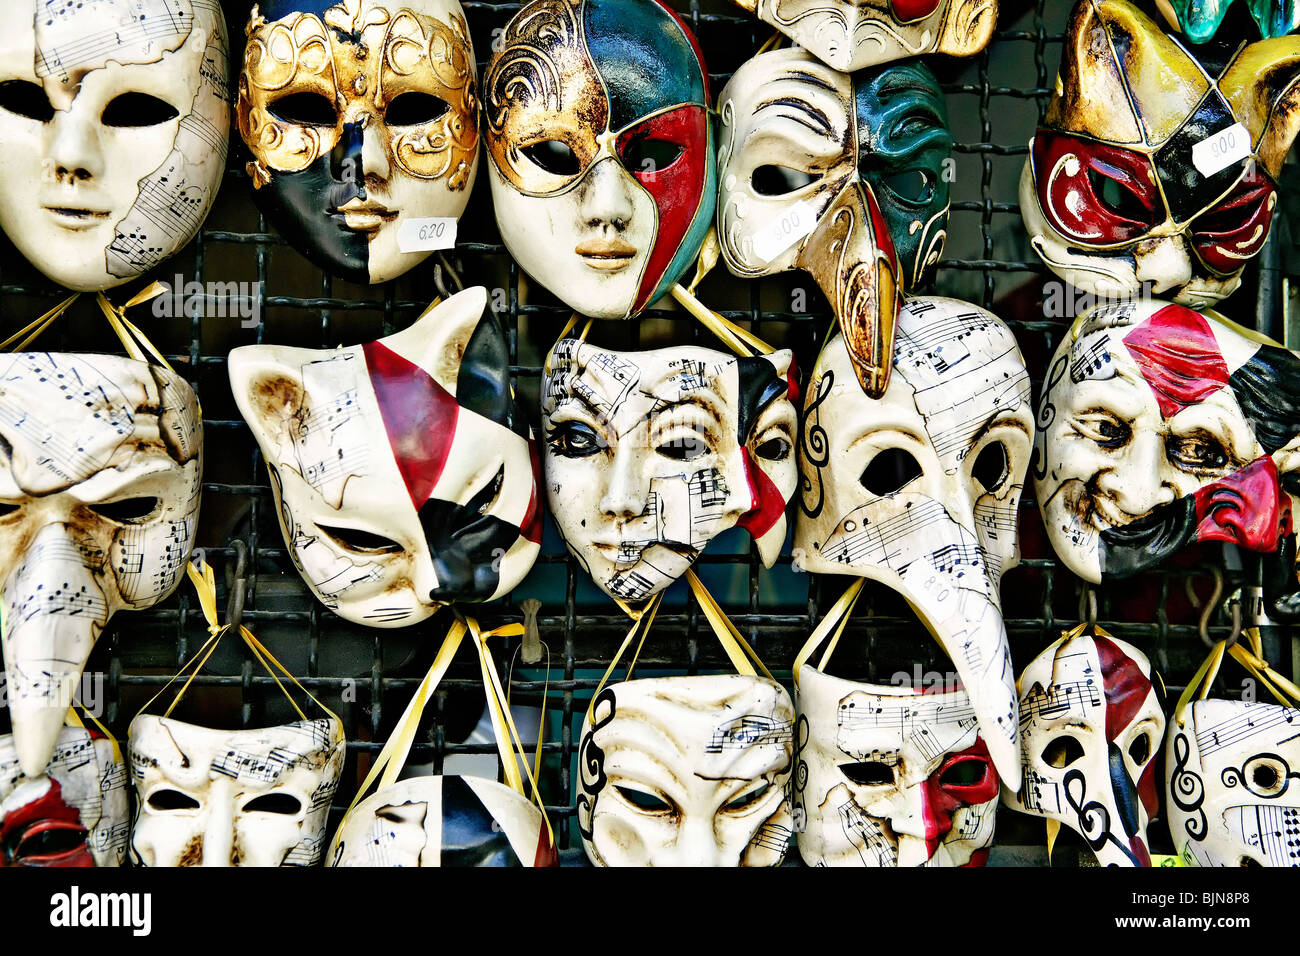 Venetian mask shop display  Venice mask, Venetian masks, Masks art